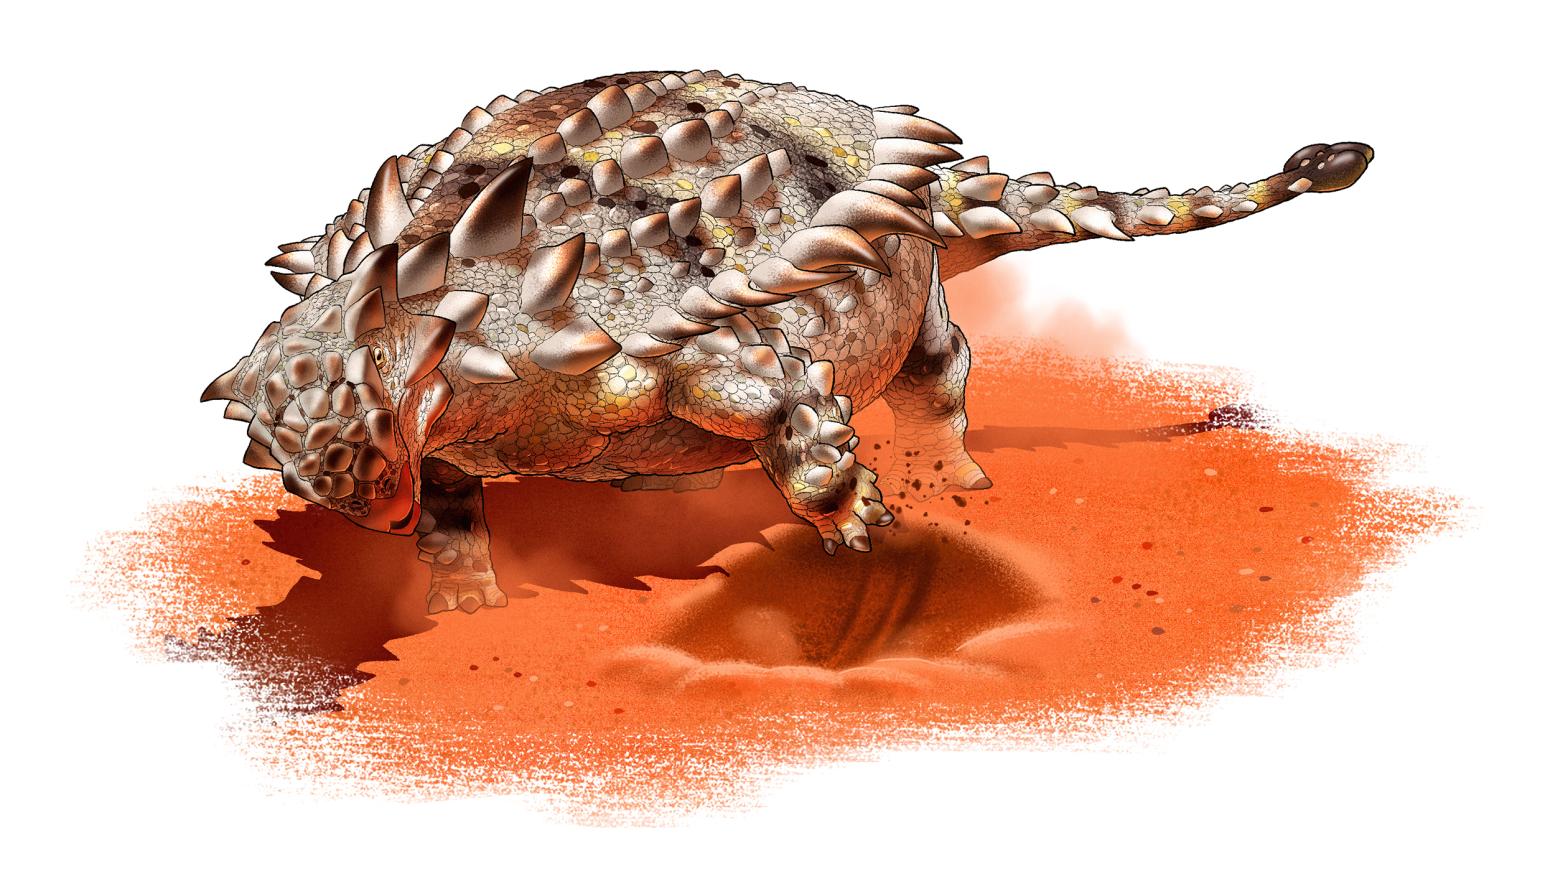 An  ankylosaur goes about excavating a defensive burrow. (Illustration: Yusik Choi)